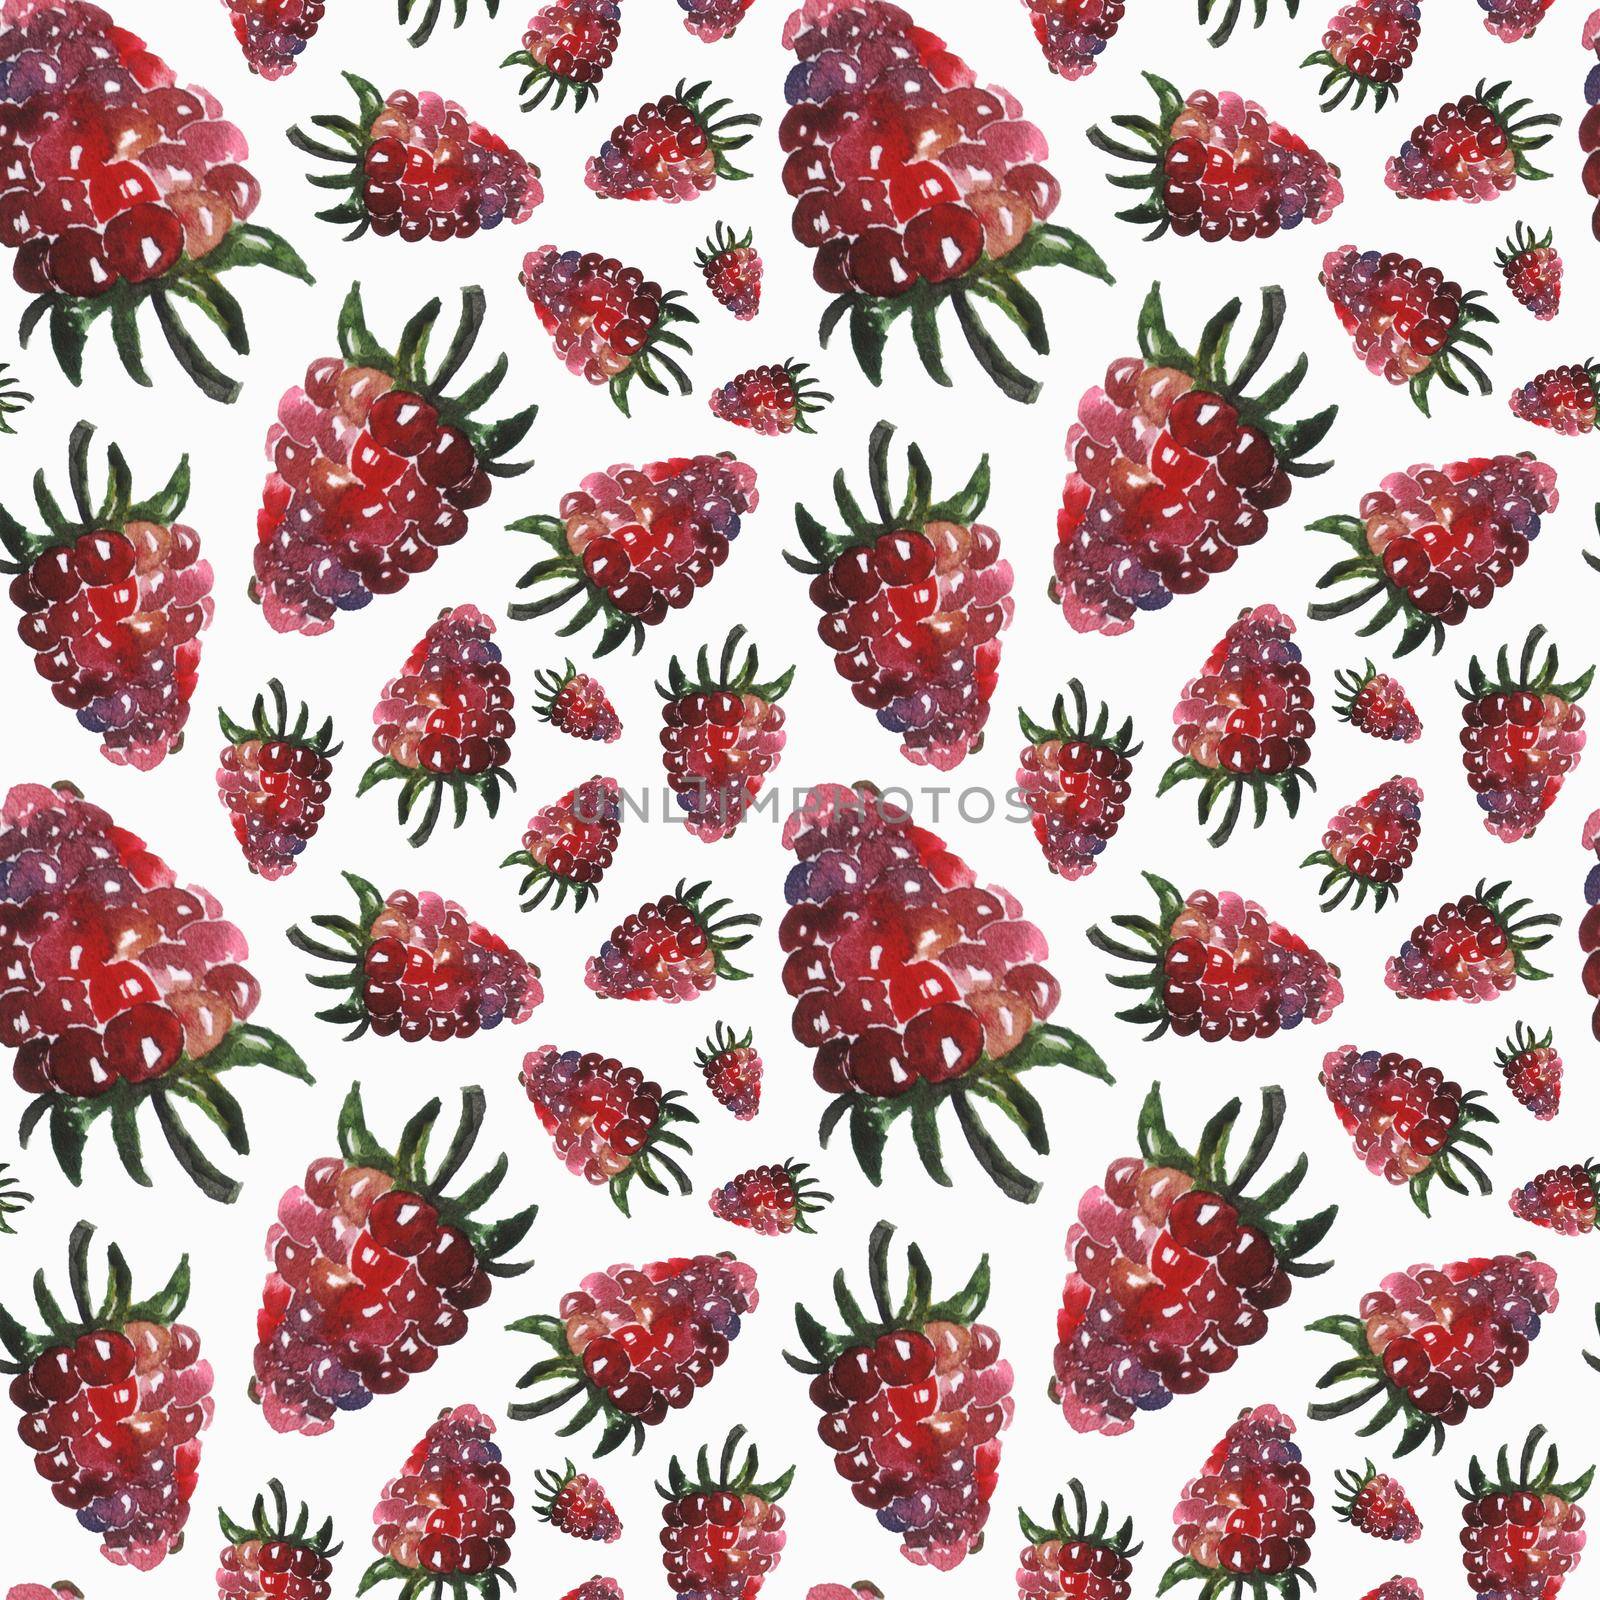 Hand drawn garden berries. Seamless pattern with raspberries. by Rodnova